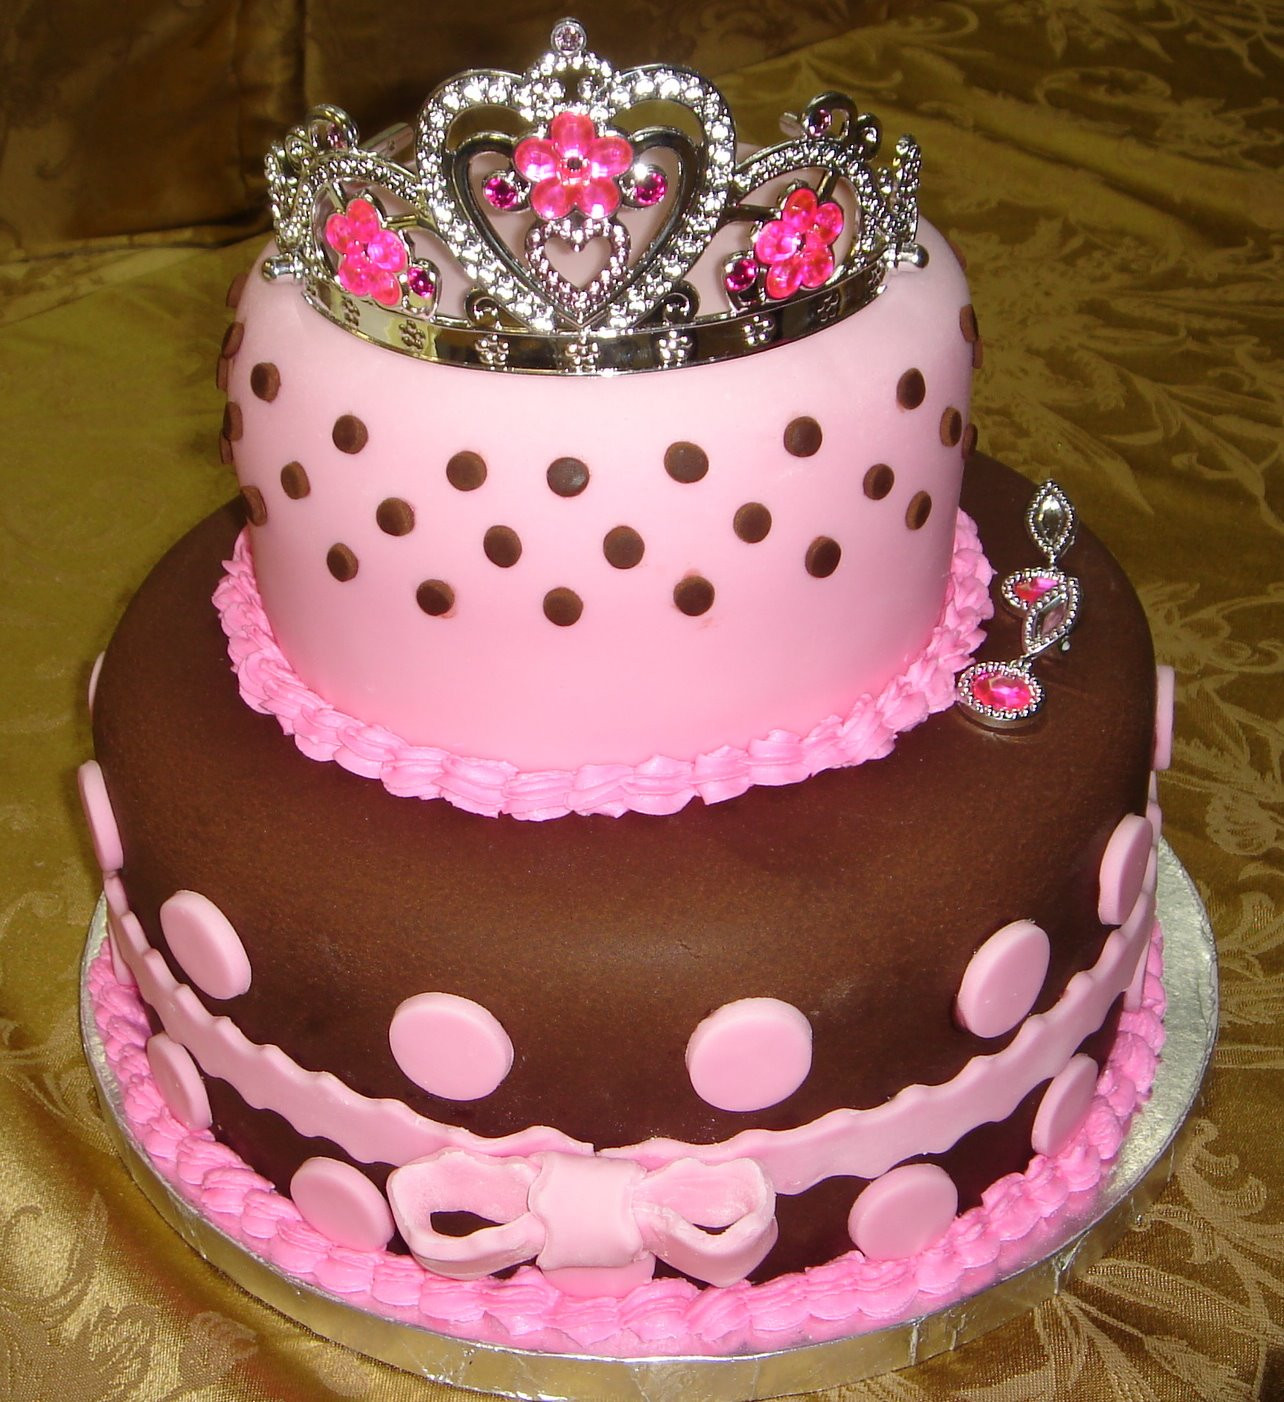 Best ideas about Bakery Birthday Cake
. Save or Pin cake birthday kids fondant buttercream princess castle Now.